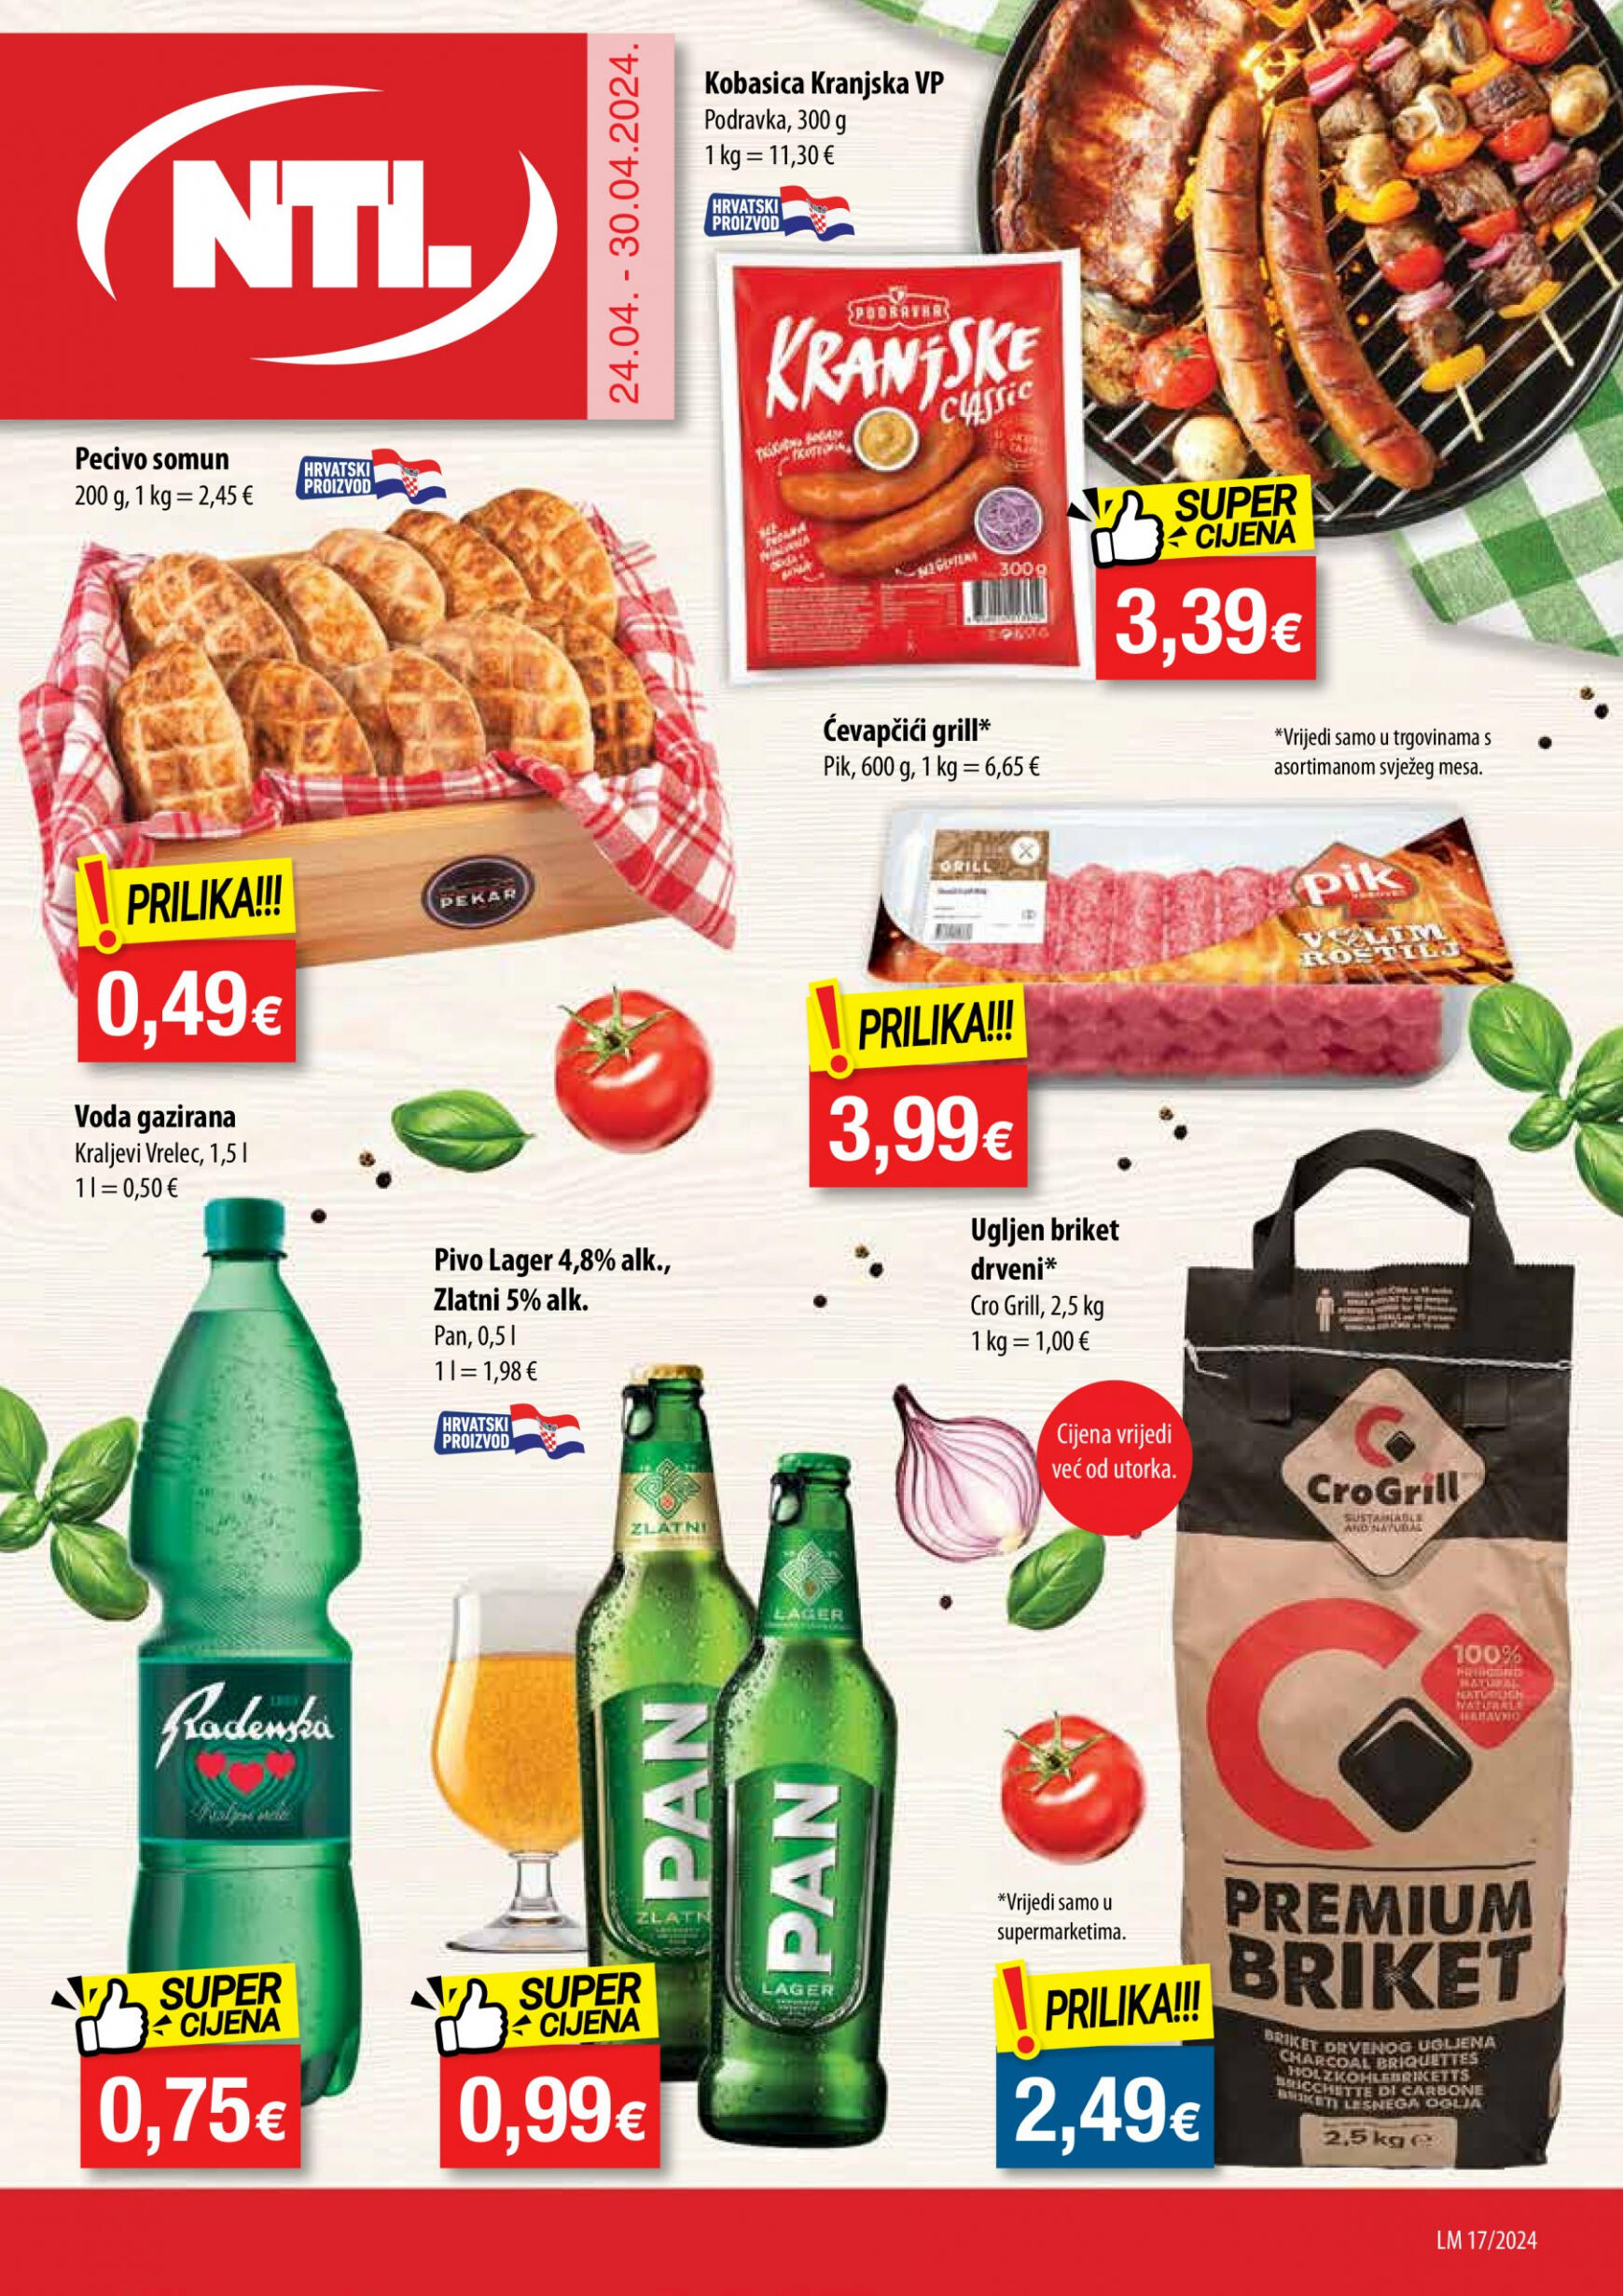 ntl - Novi katalog NTL - Supermarketi Soblinec, Krapina, Duga Resa 24.04. - 30.04. - page: 1